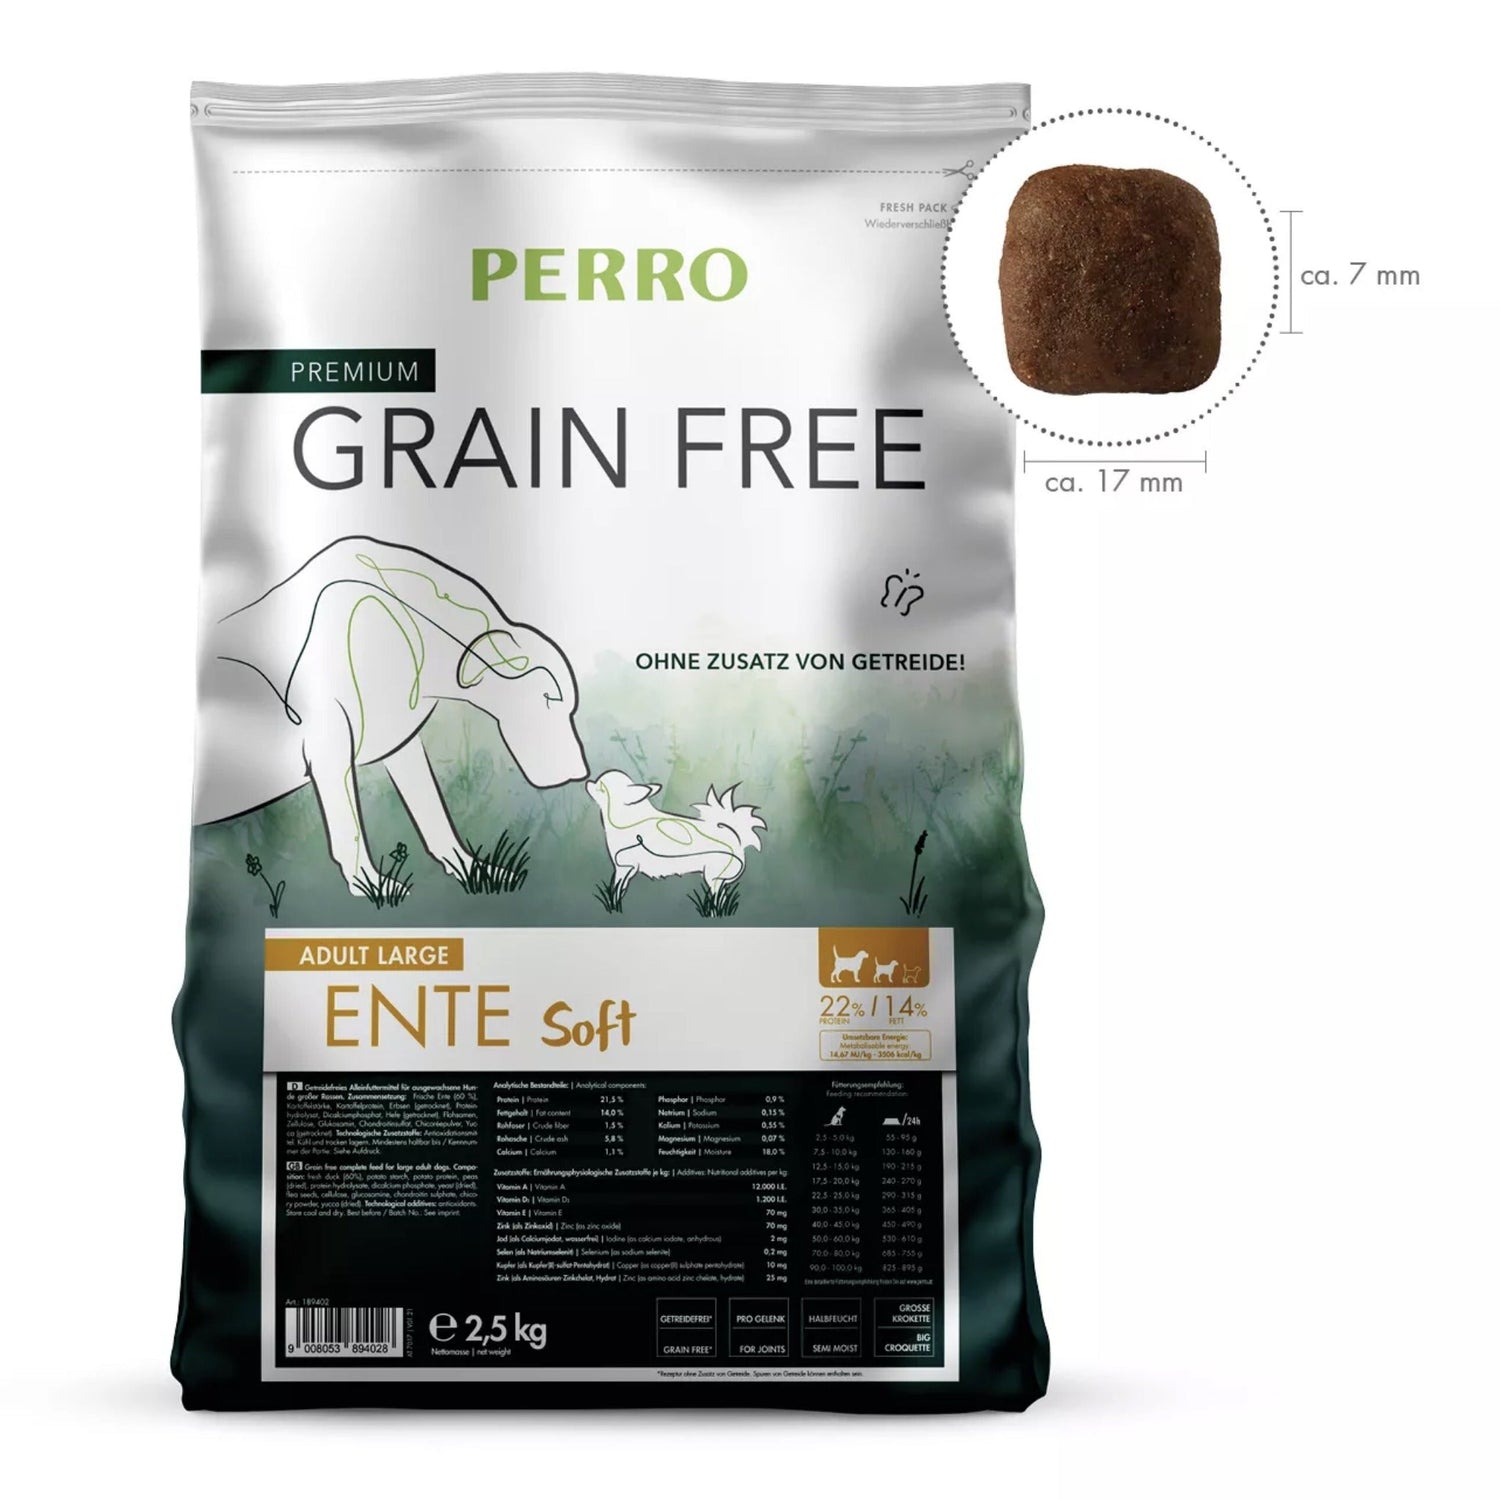 Perro Grain Free Adult Large Ente Soft - Hunde Trockenfutter - Woofshack